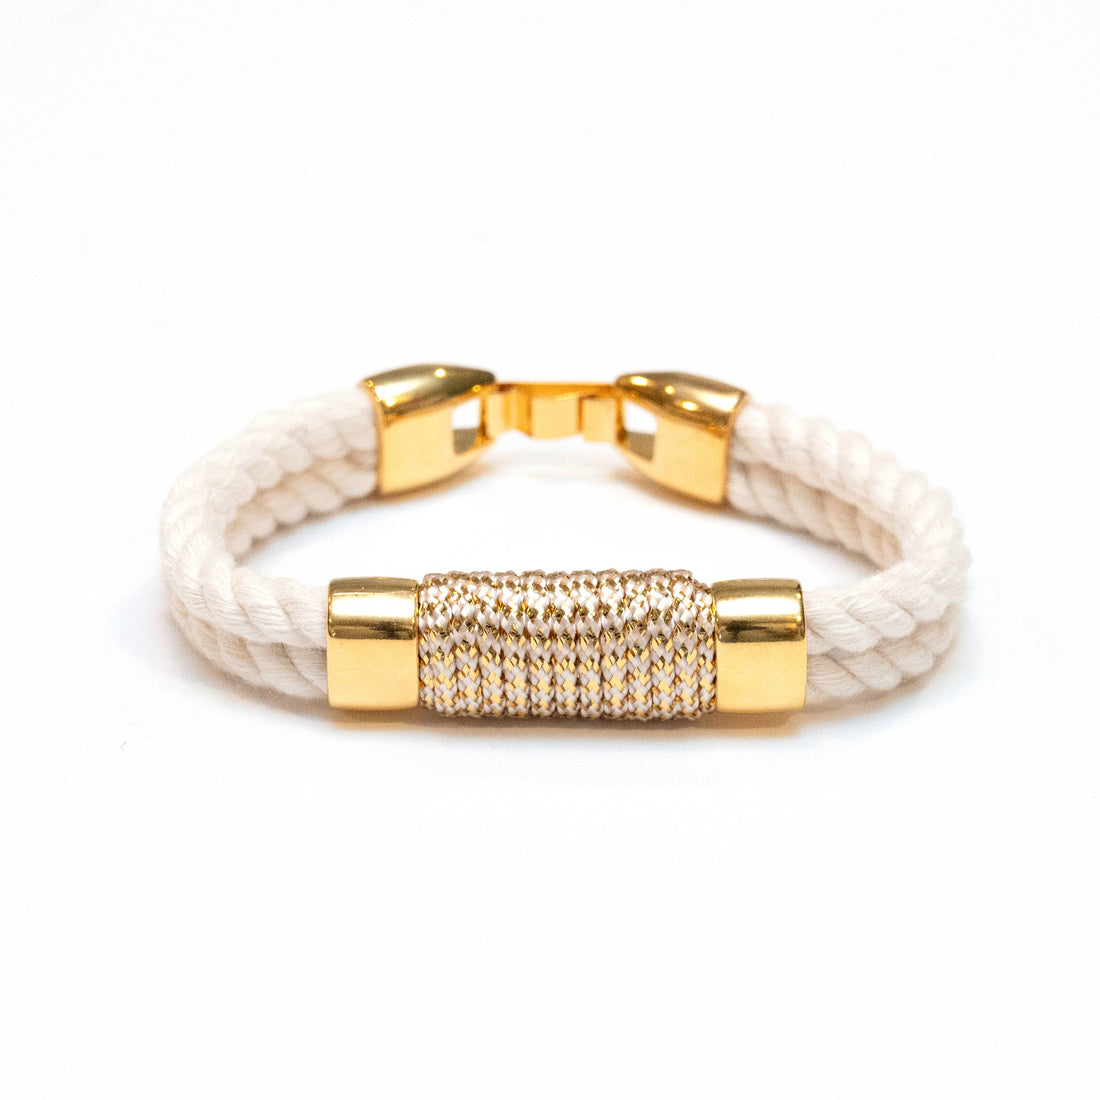 Tremont Bracelet - Ivory/Metallic Gold: L